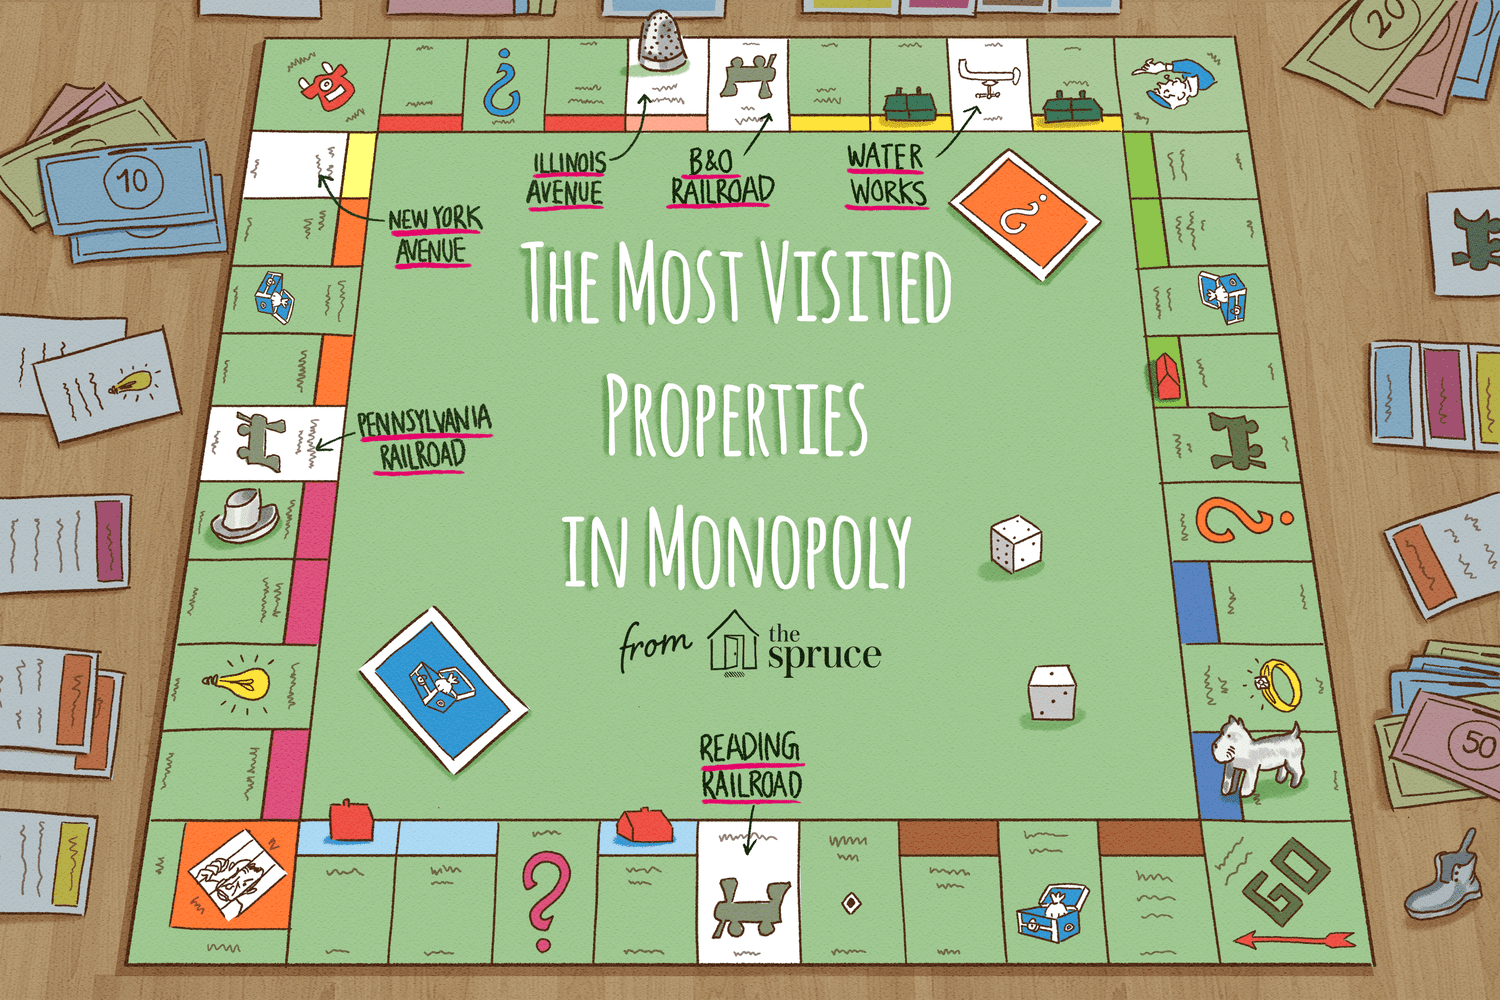 Illustration of monopoly board